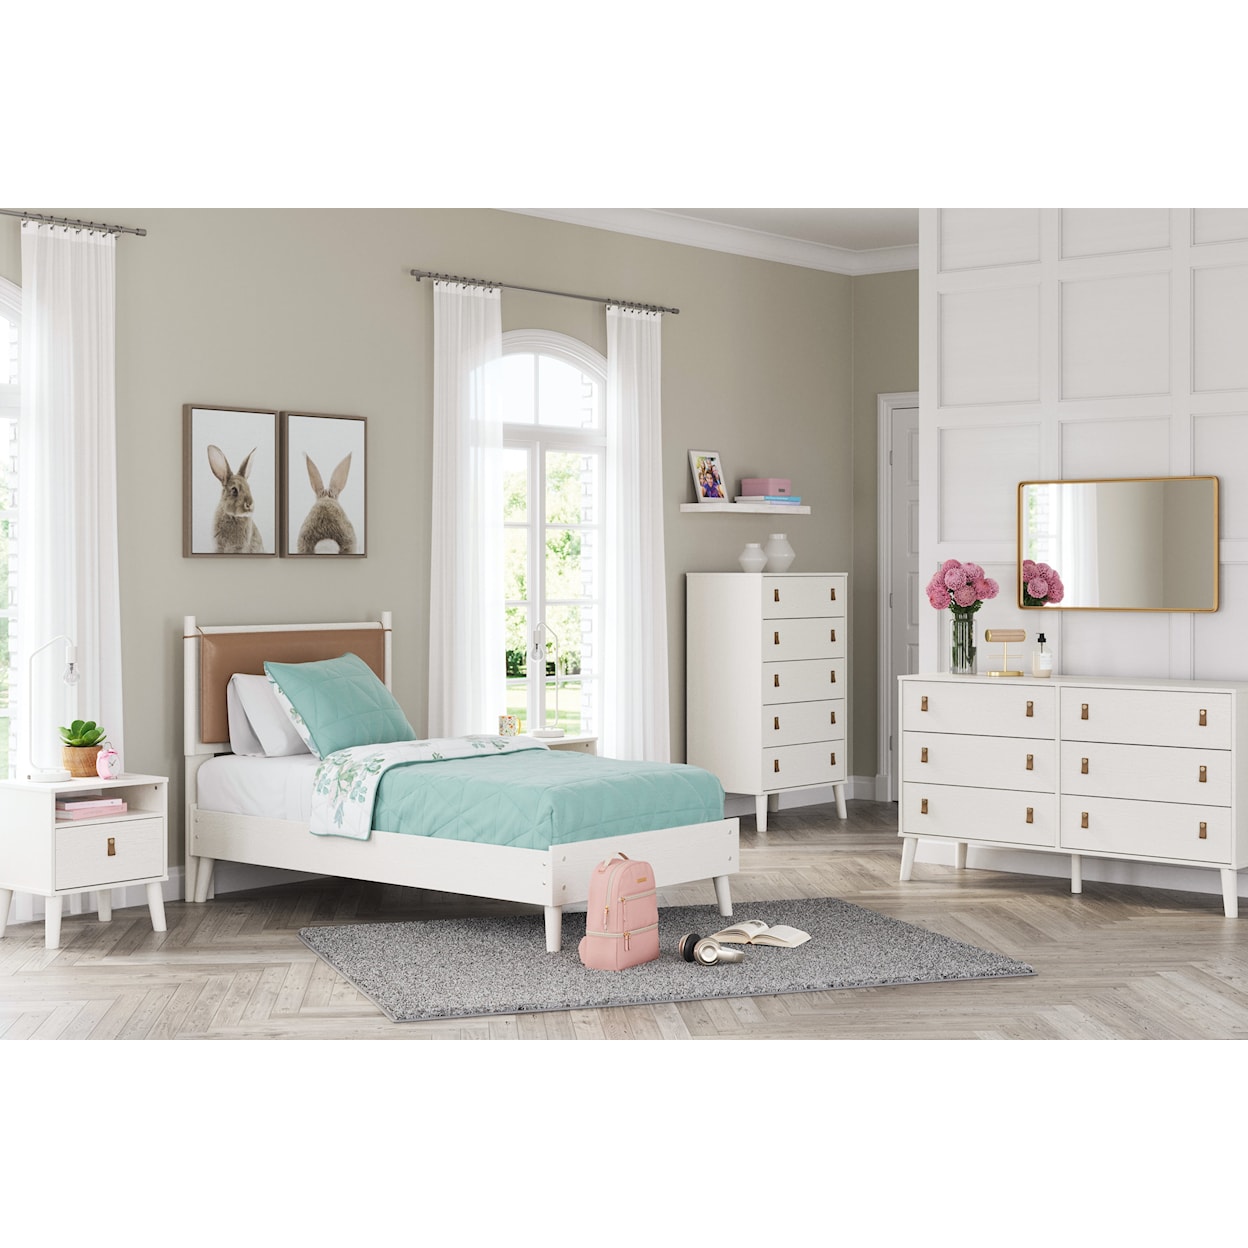 Ashley Furniture Signature Design Aprilyn Twin Bedroom Set